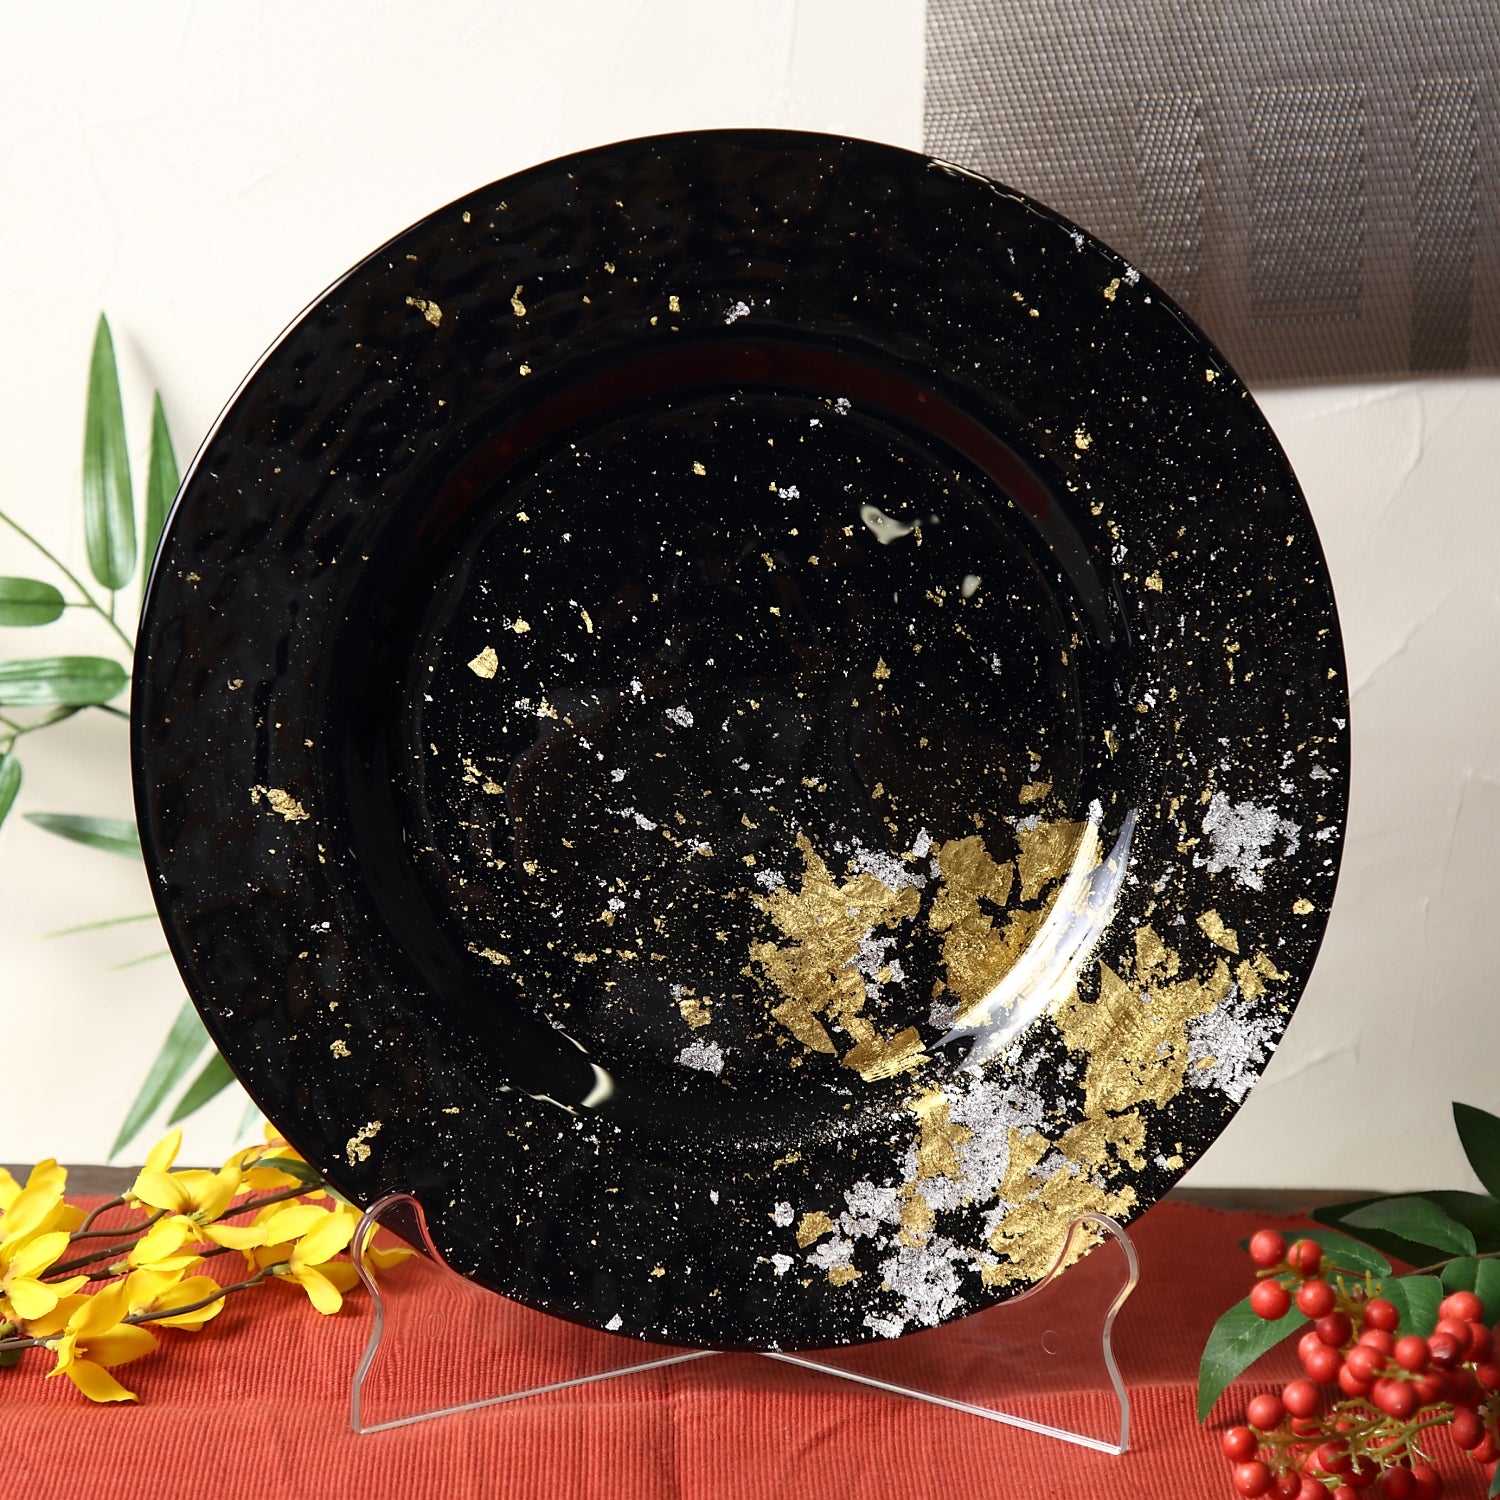 Syosaku Japanese Urushi Glass Dinner Plate 12.5-inch (32cm) Jet Black with Gold Leaf, Dishwasher Safe